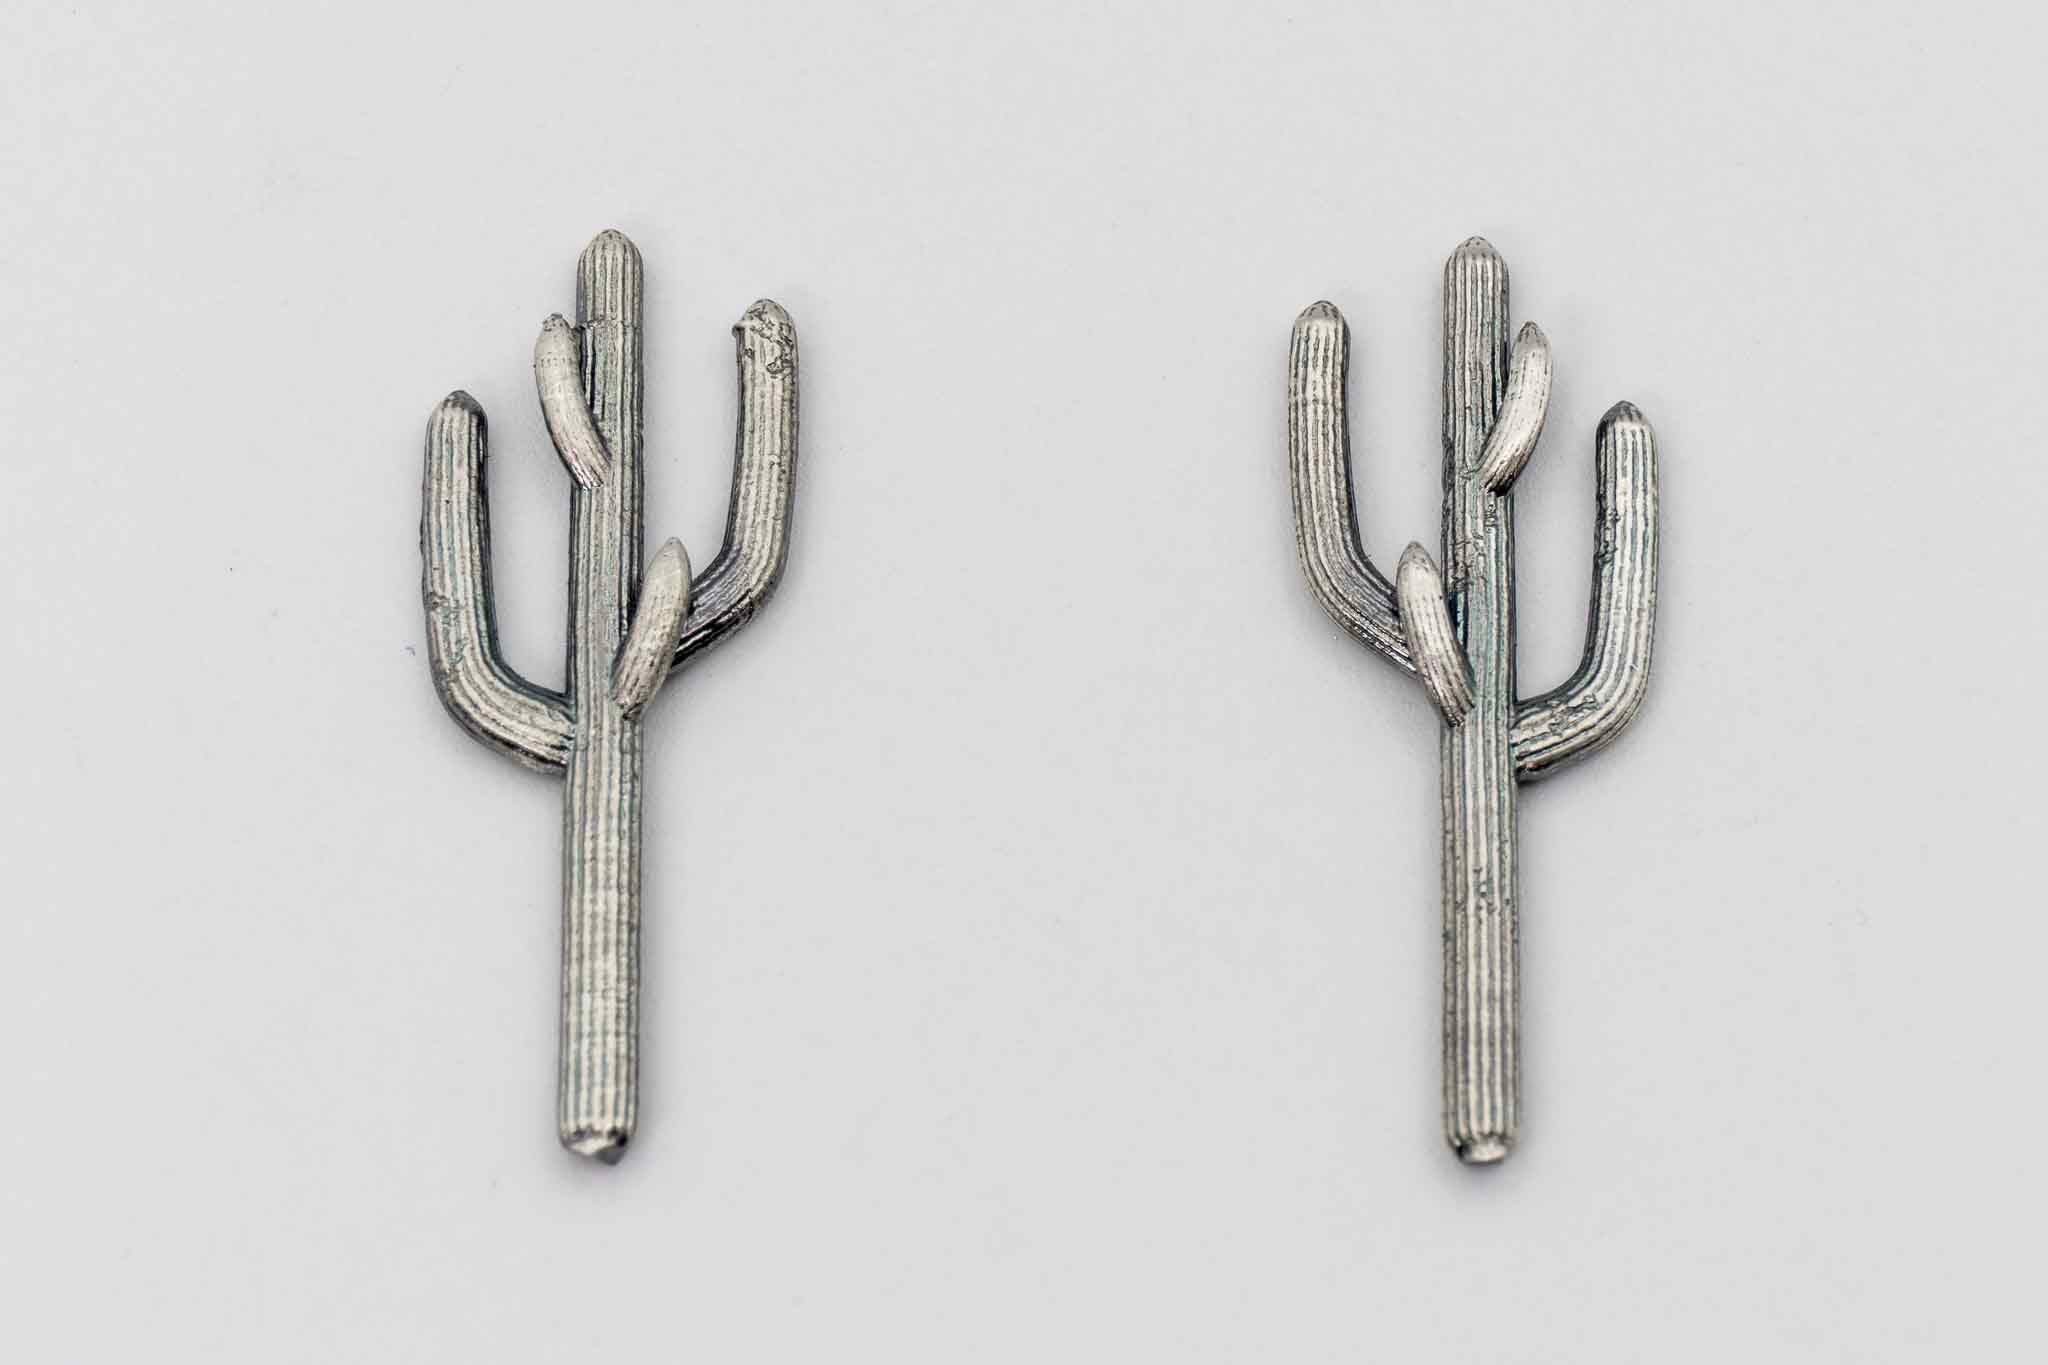 Saguaro Cactus Jewelry